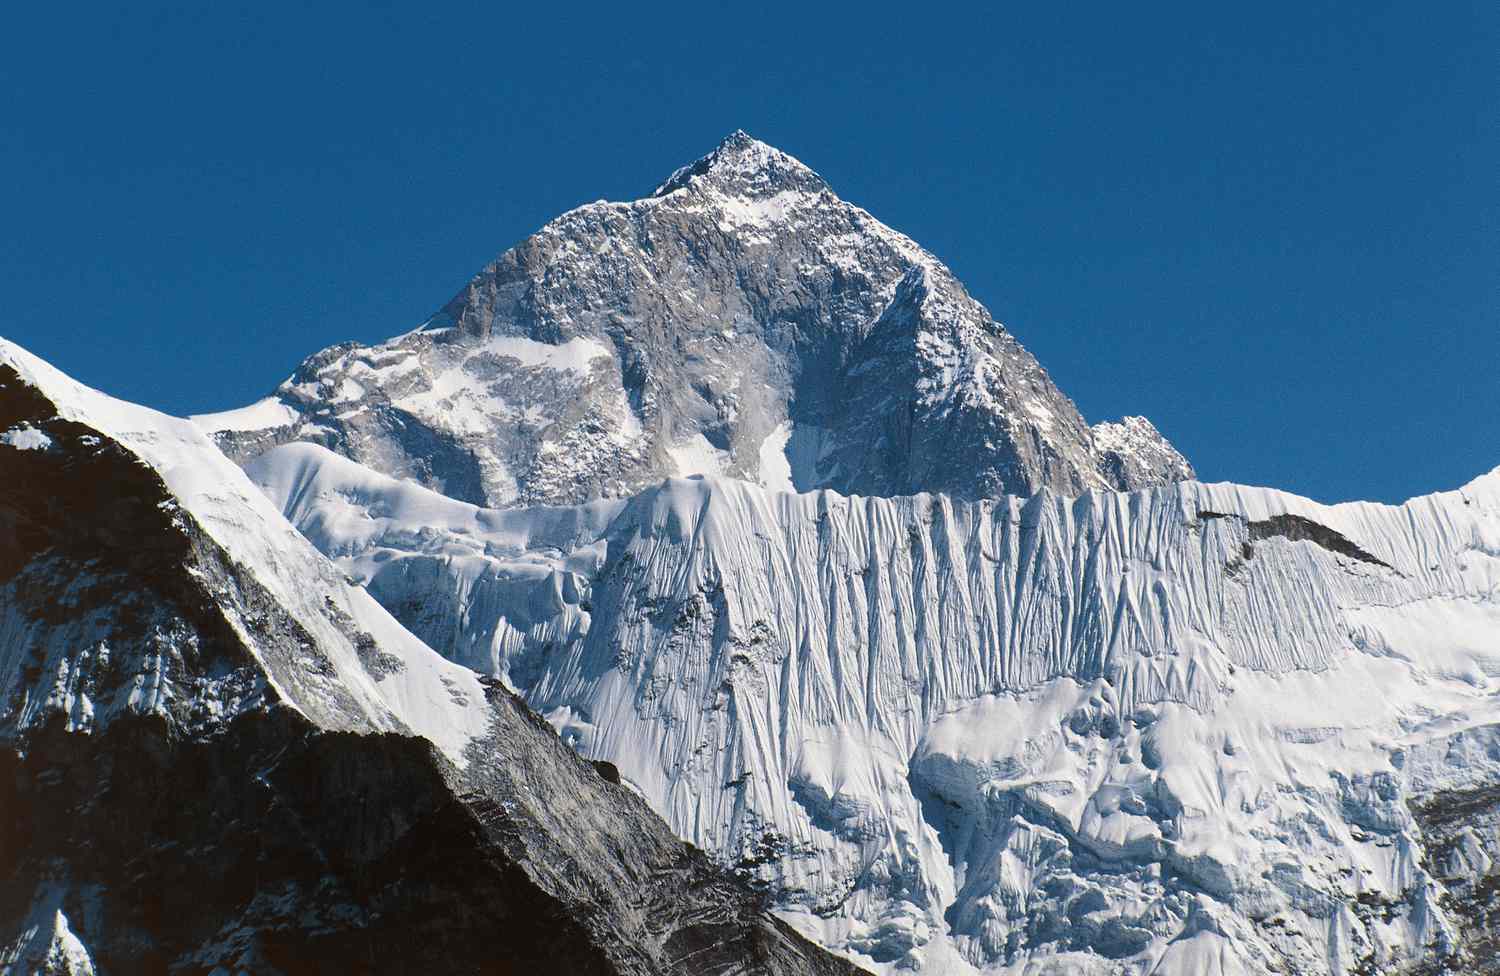 Makalu 5th highest mountain in the world